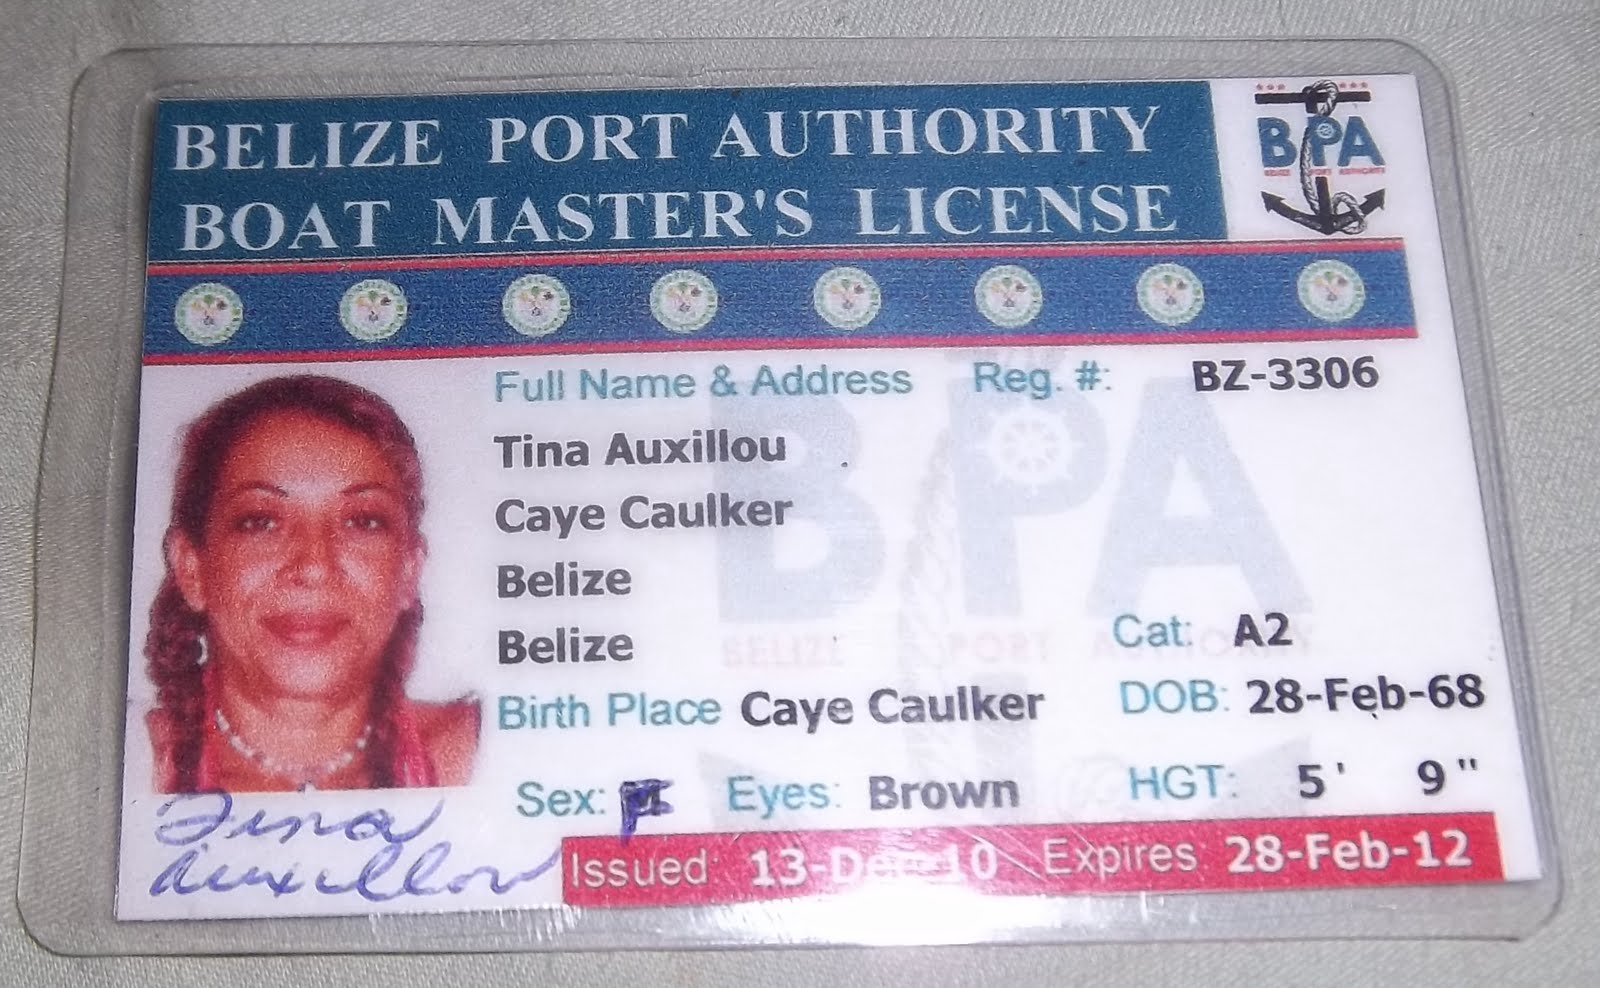 Western Belize Happenings! First Lady Sea Captain in Belize?